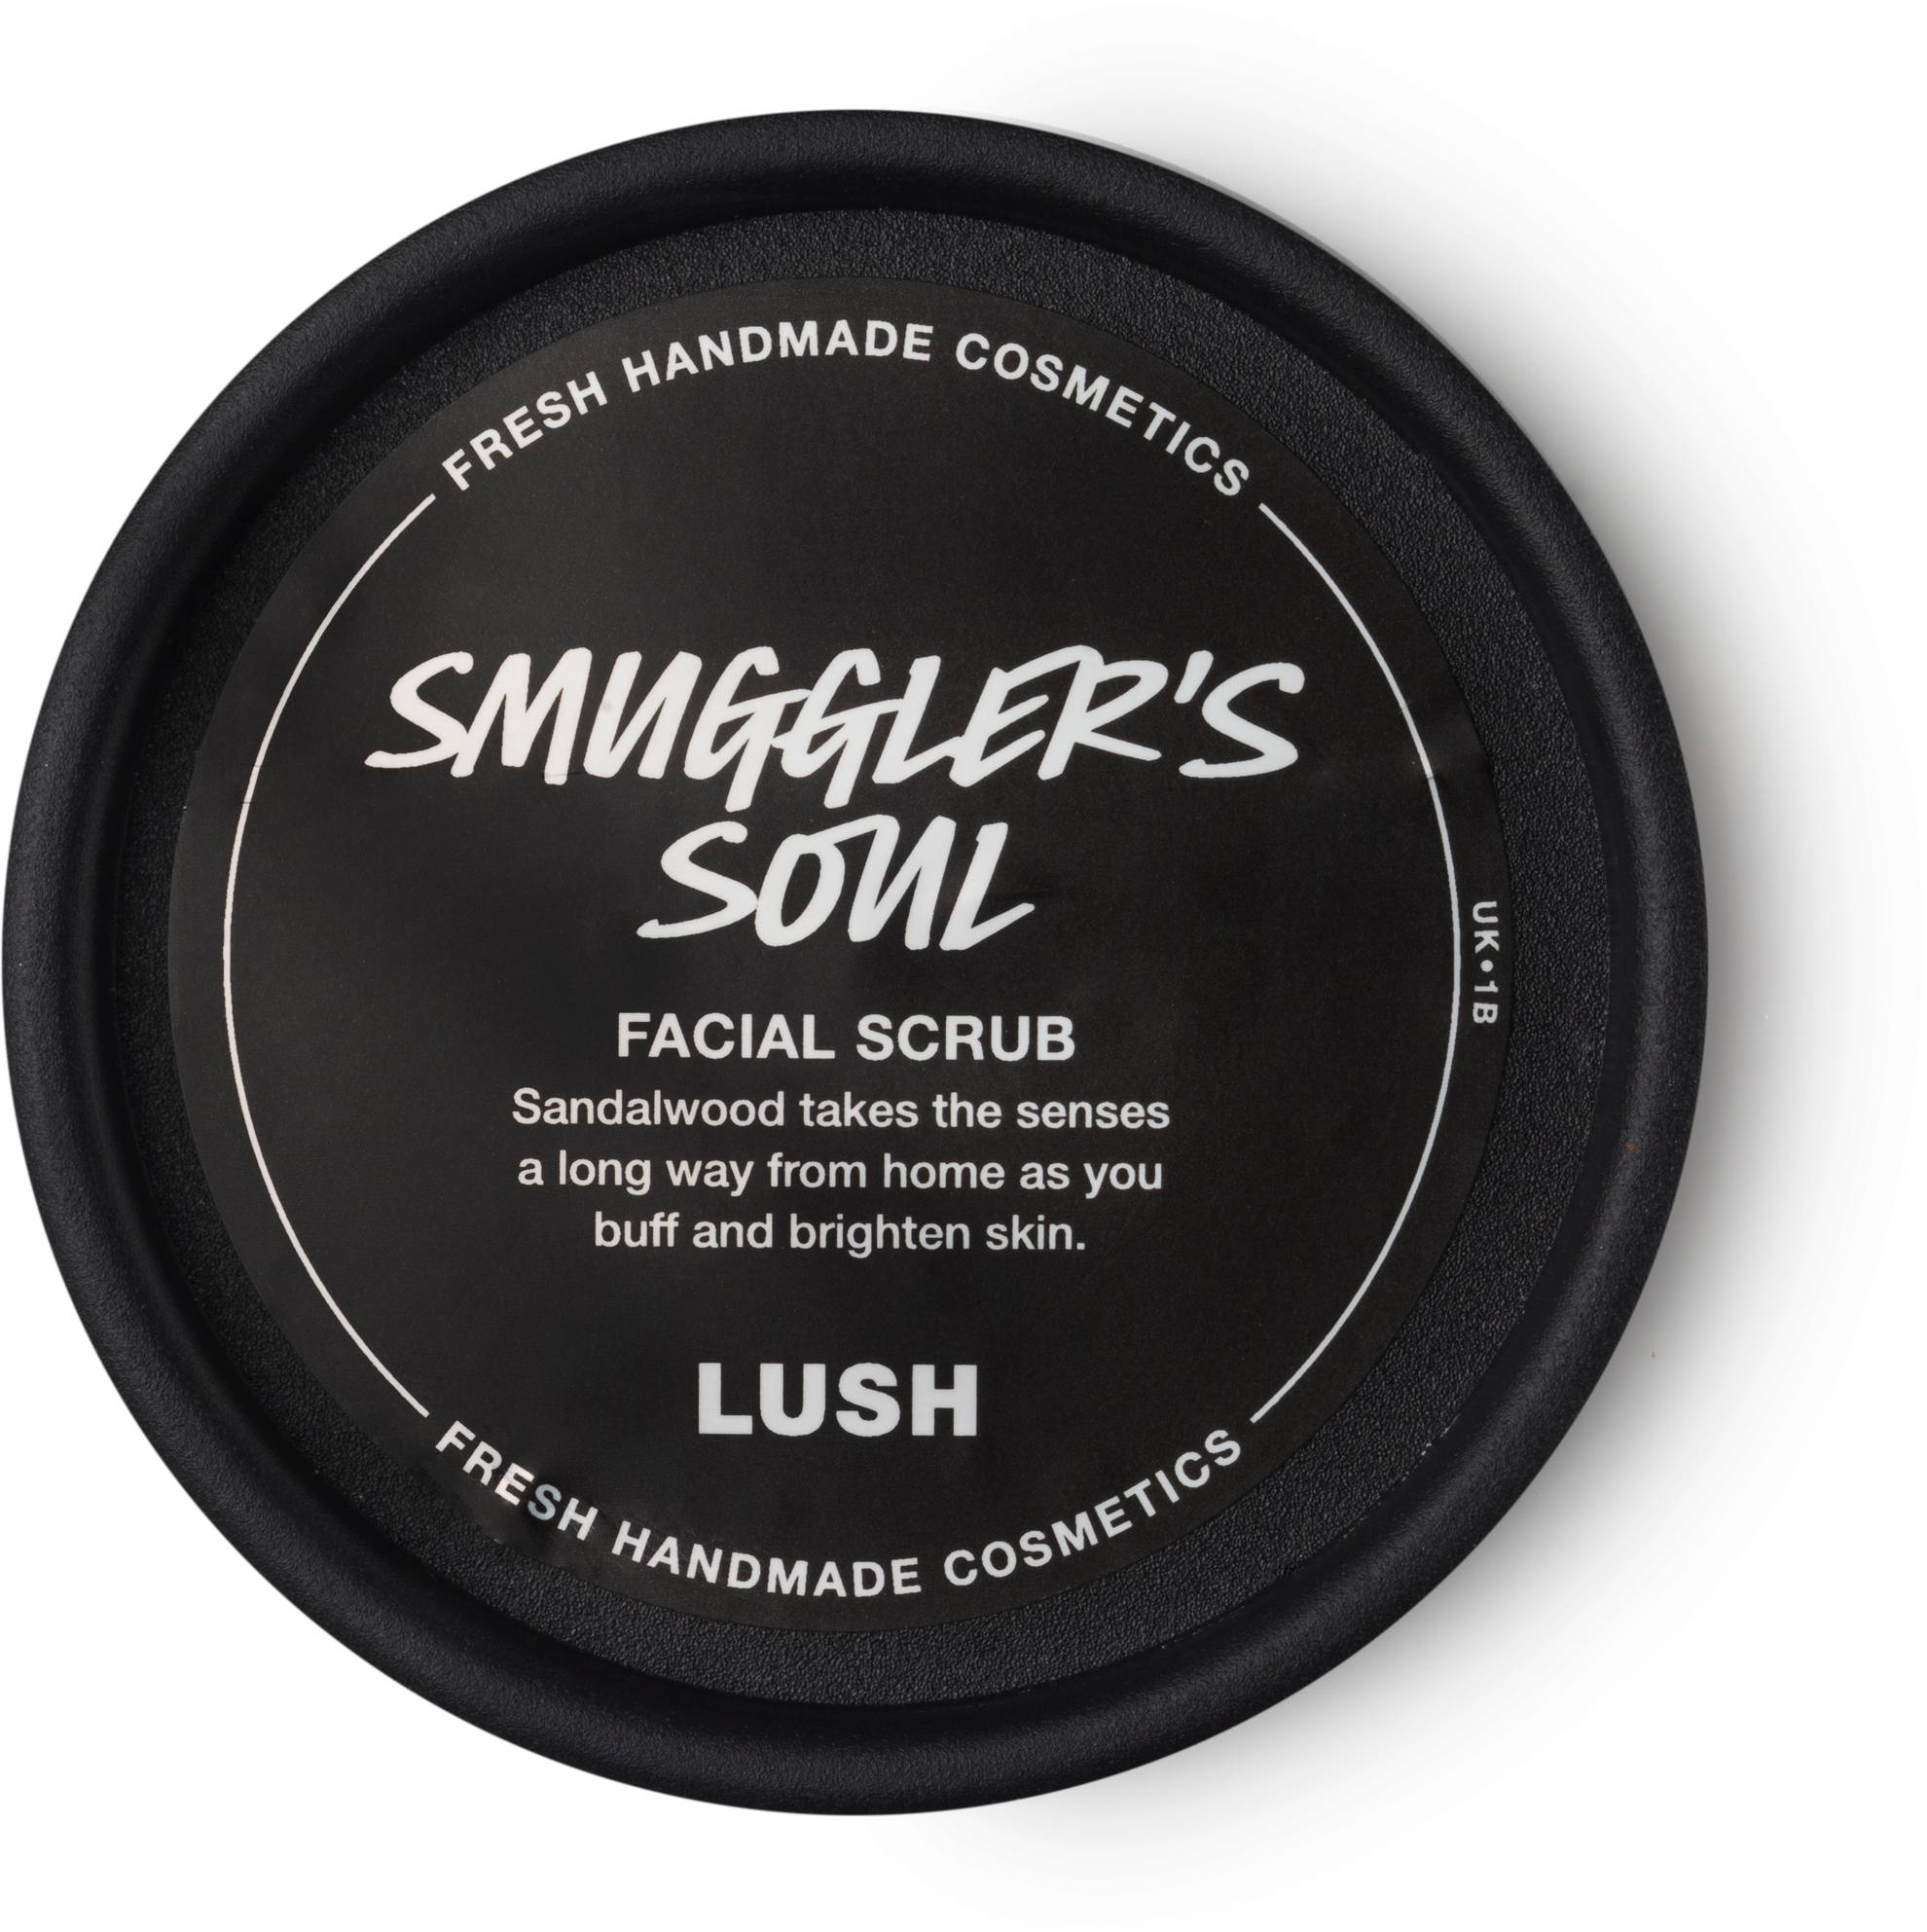 lush smuggler's soul review